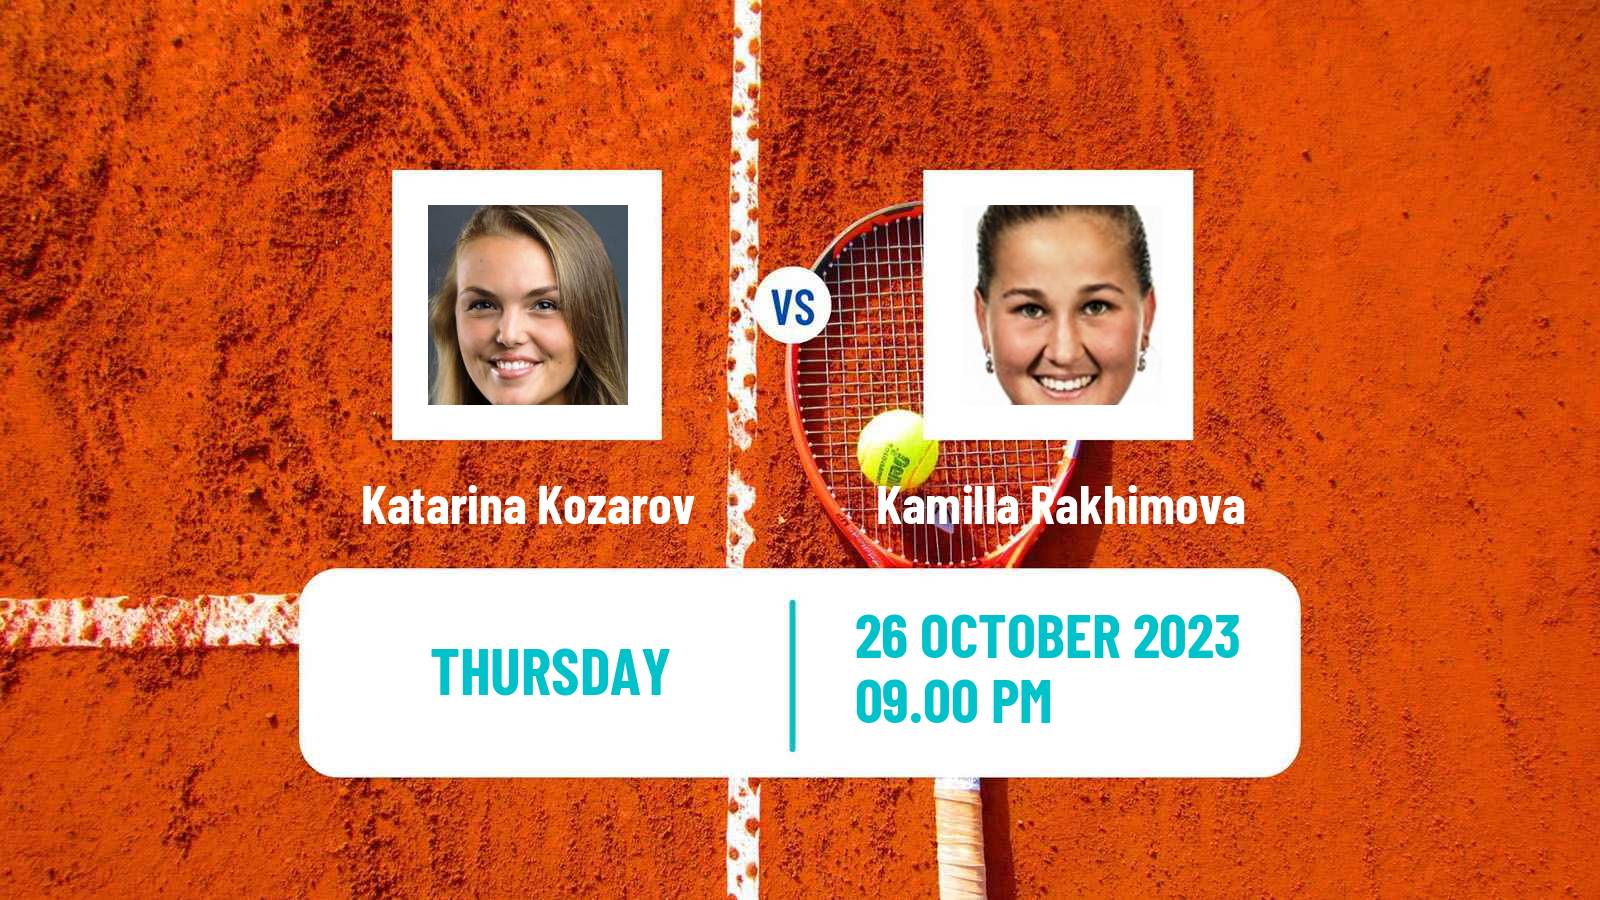 Tennis Tampico Challenger Women Katarina Kozarov - Kamilla Rakhimova